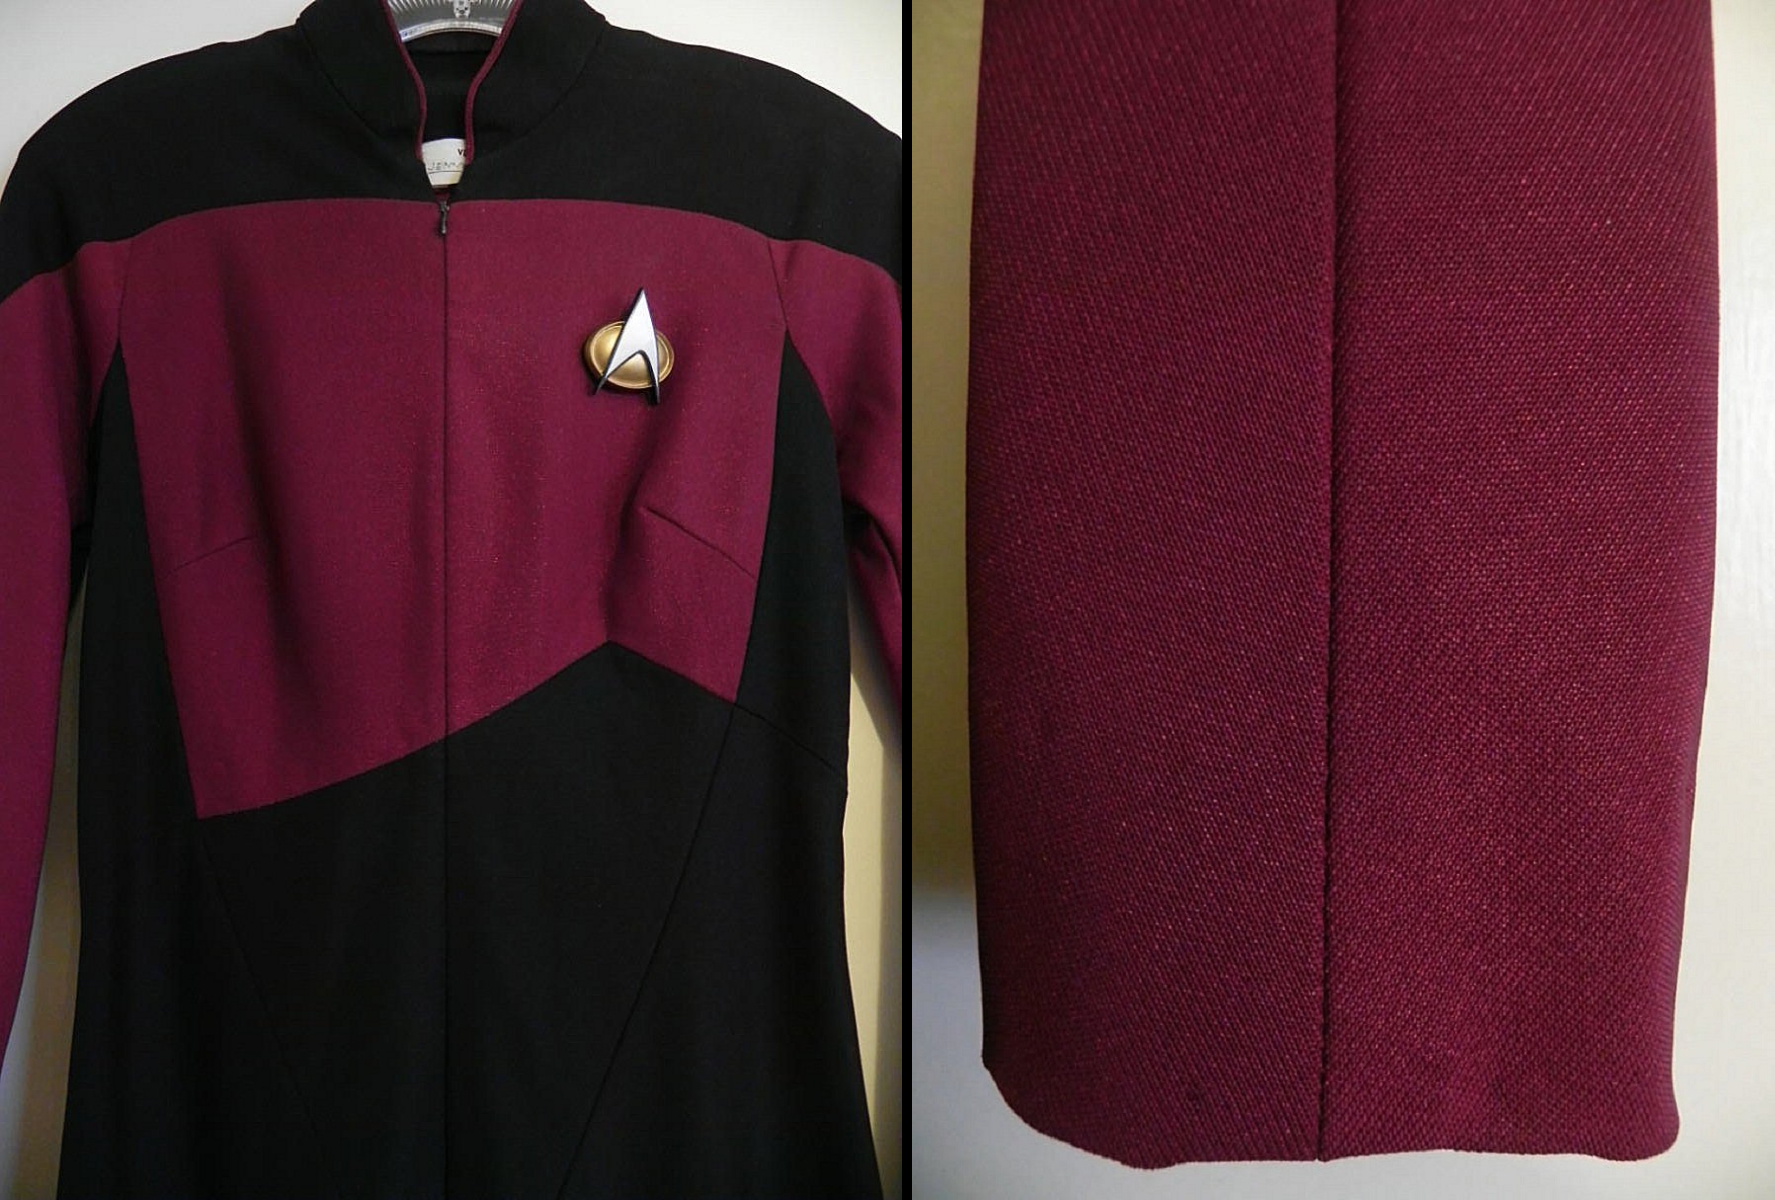 TNG jumpsuit sewing tutorial - Star Trek Costume Guide